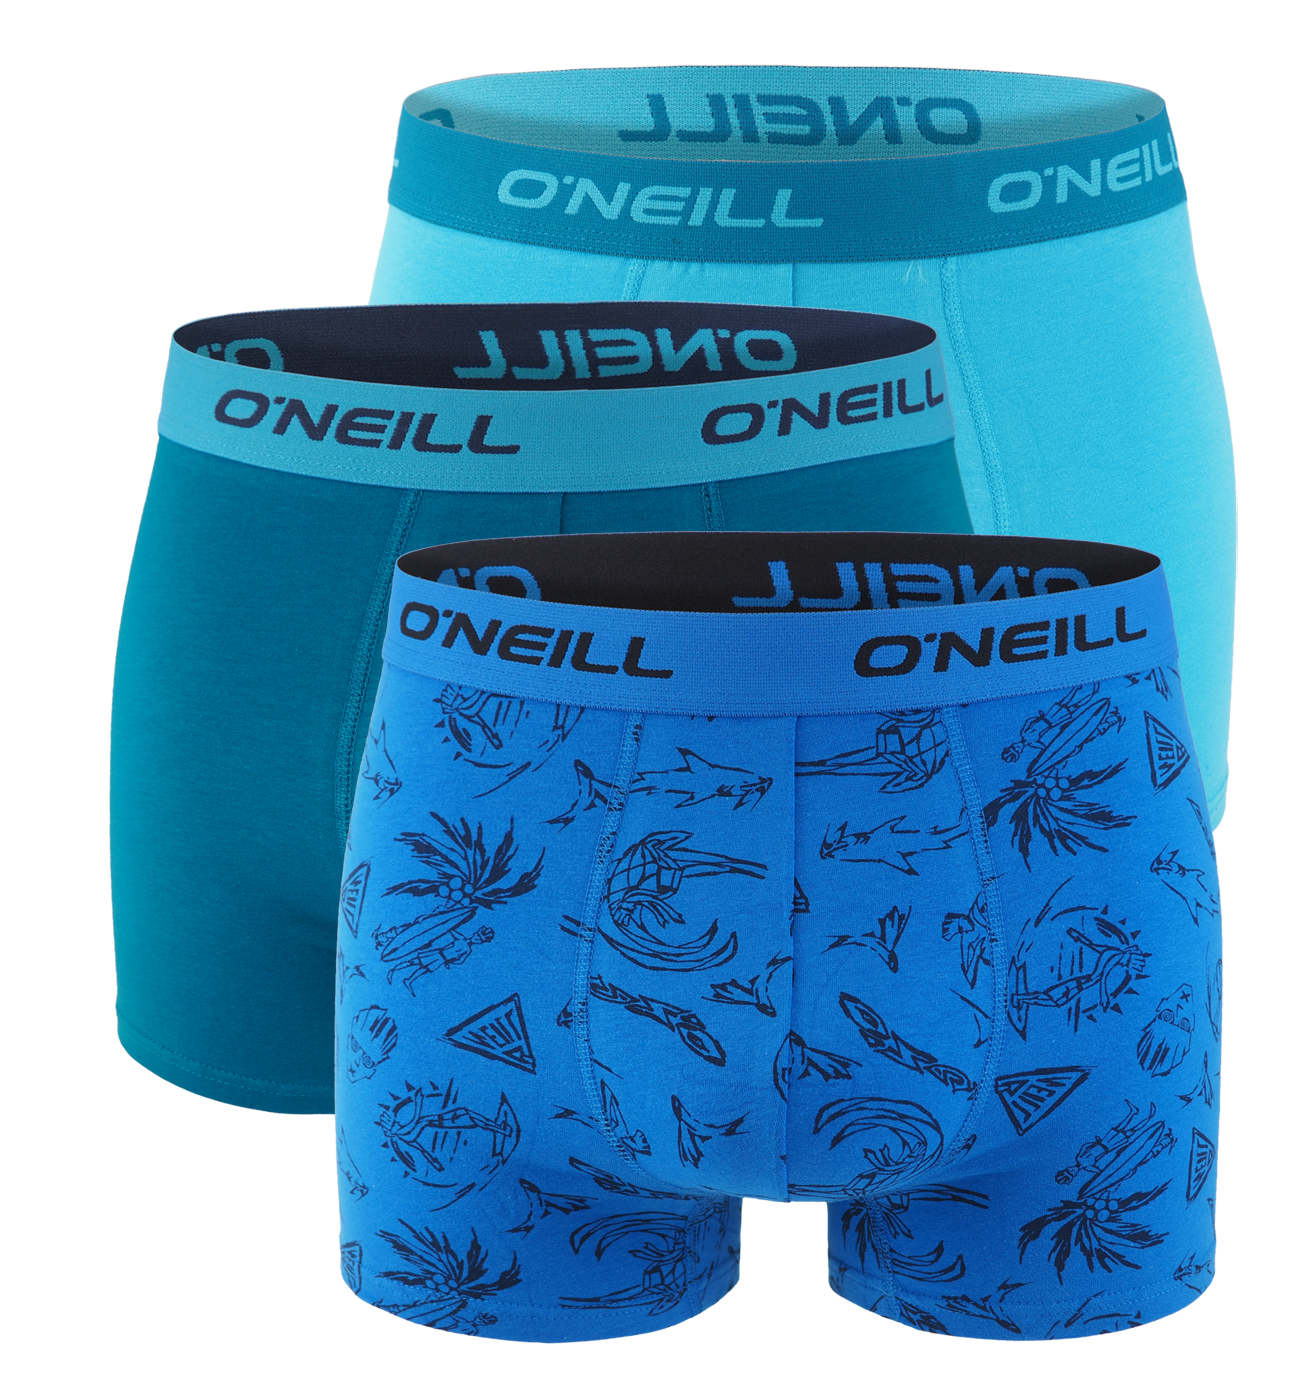 O'NEILL - boxerky 3PACK ocean & beach blue color combo - limitovana edicia-L (89 - 95 cm)